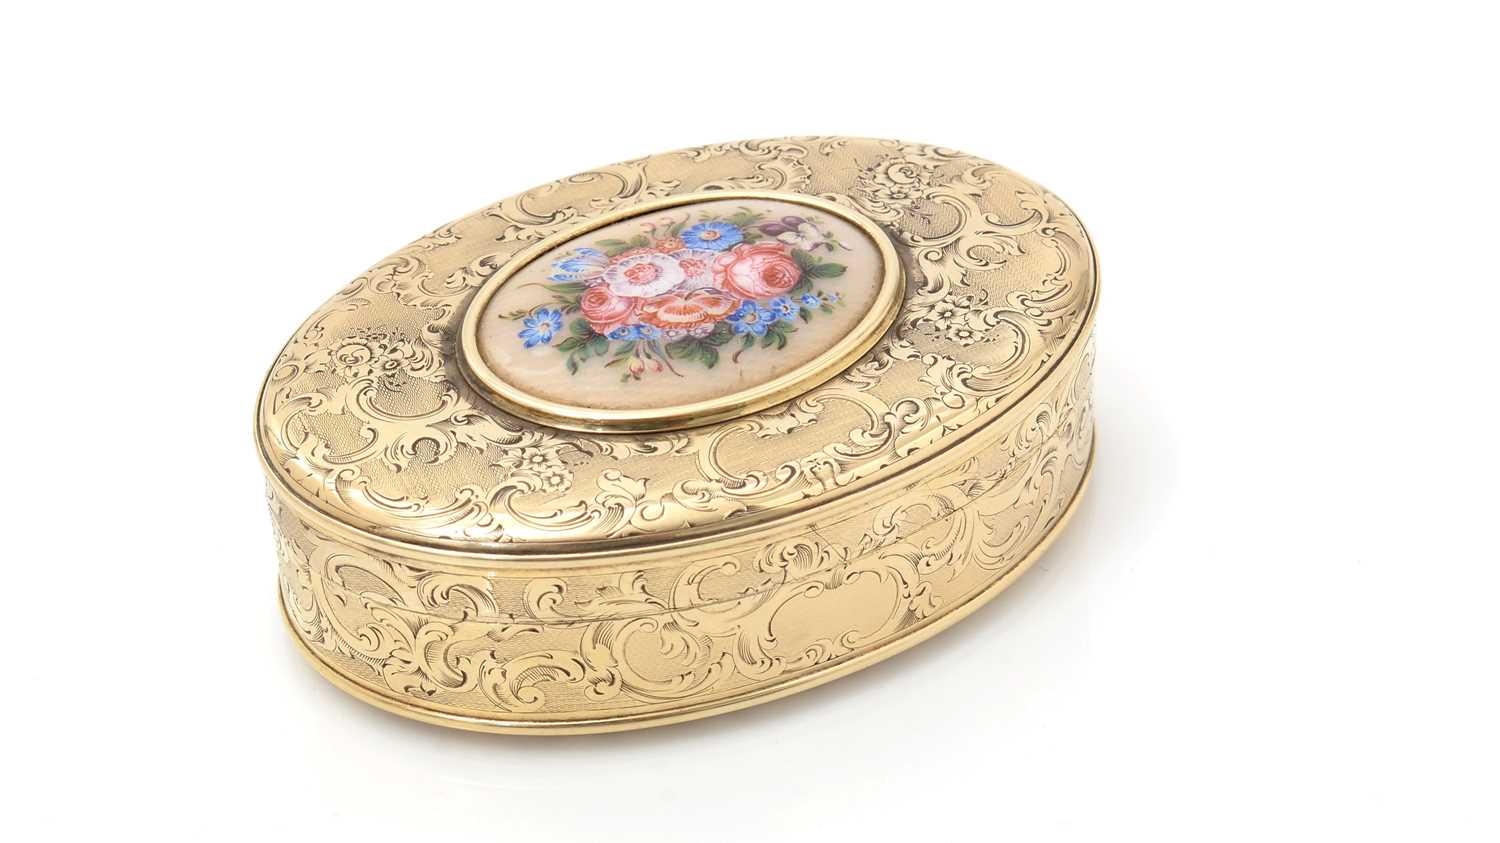 A mid 19th Century Continental silver-gilt snuff box.